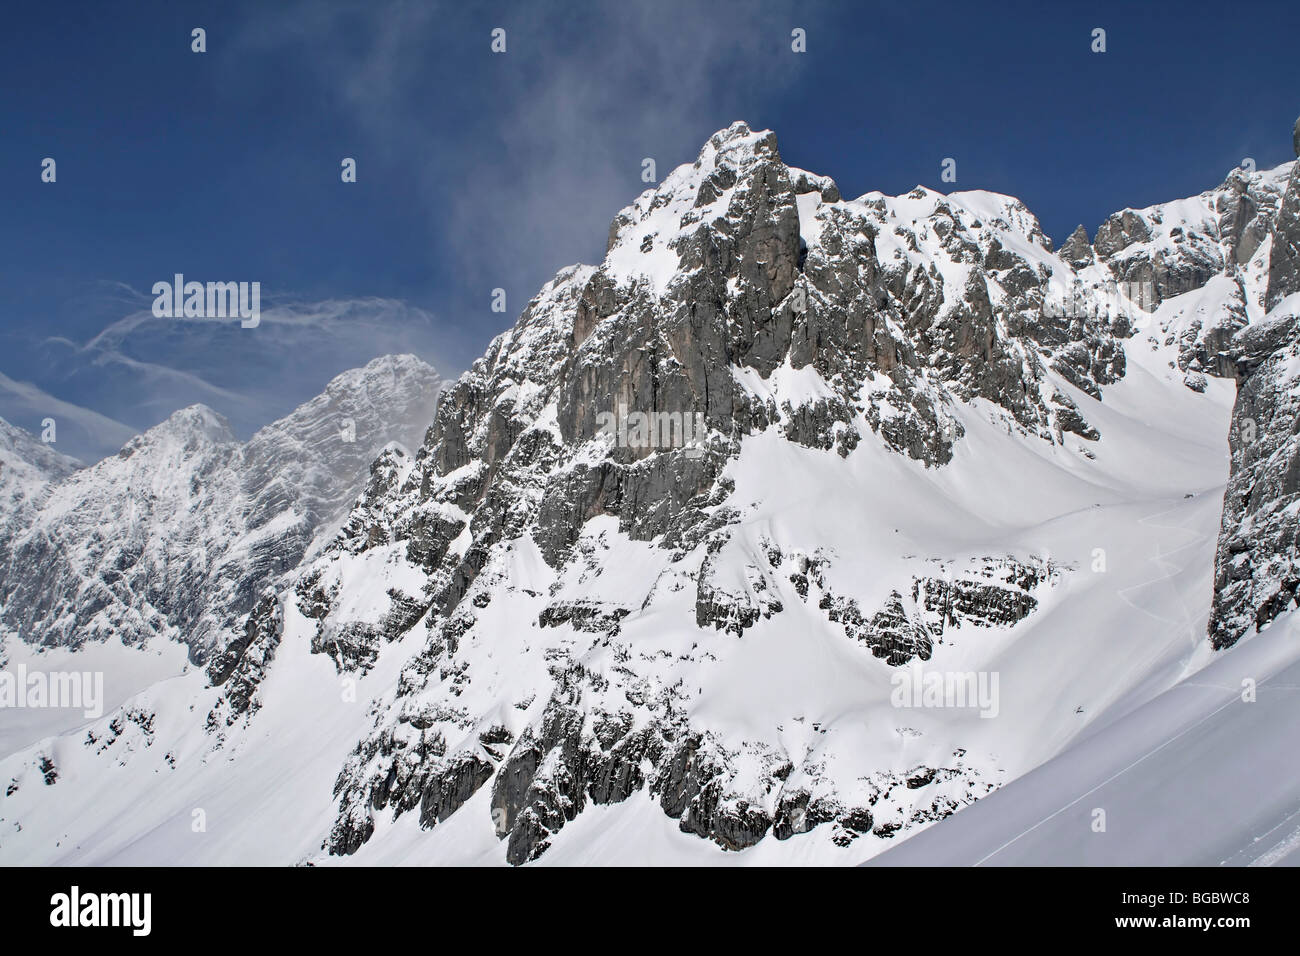 Snowy mountains before a storm, Dachstein, Ramsau, Austria, Europe Stock Photo